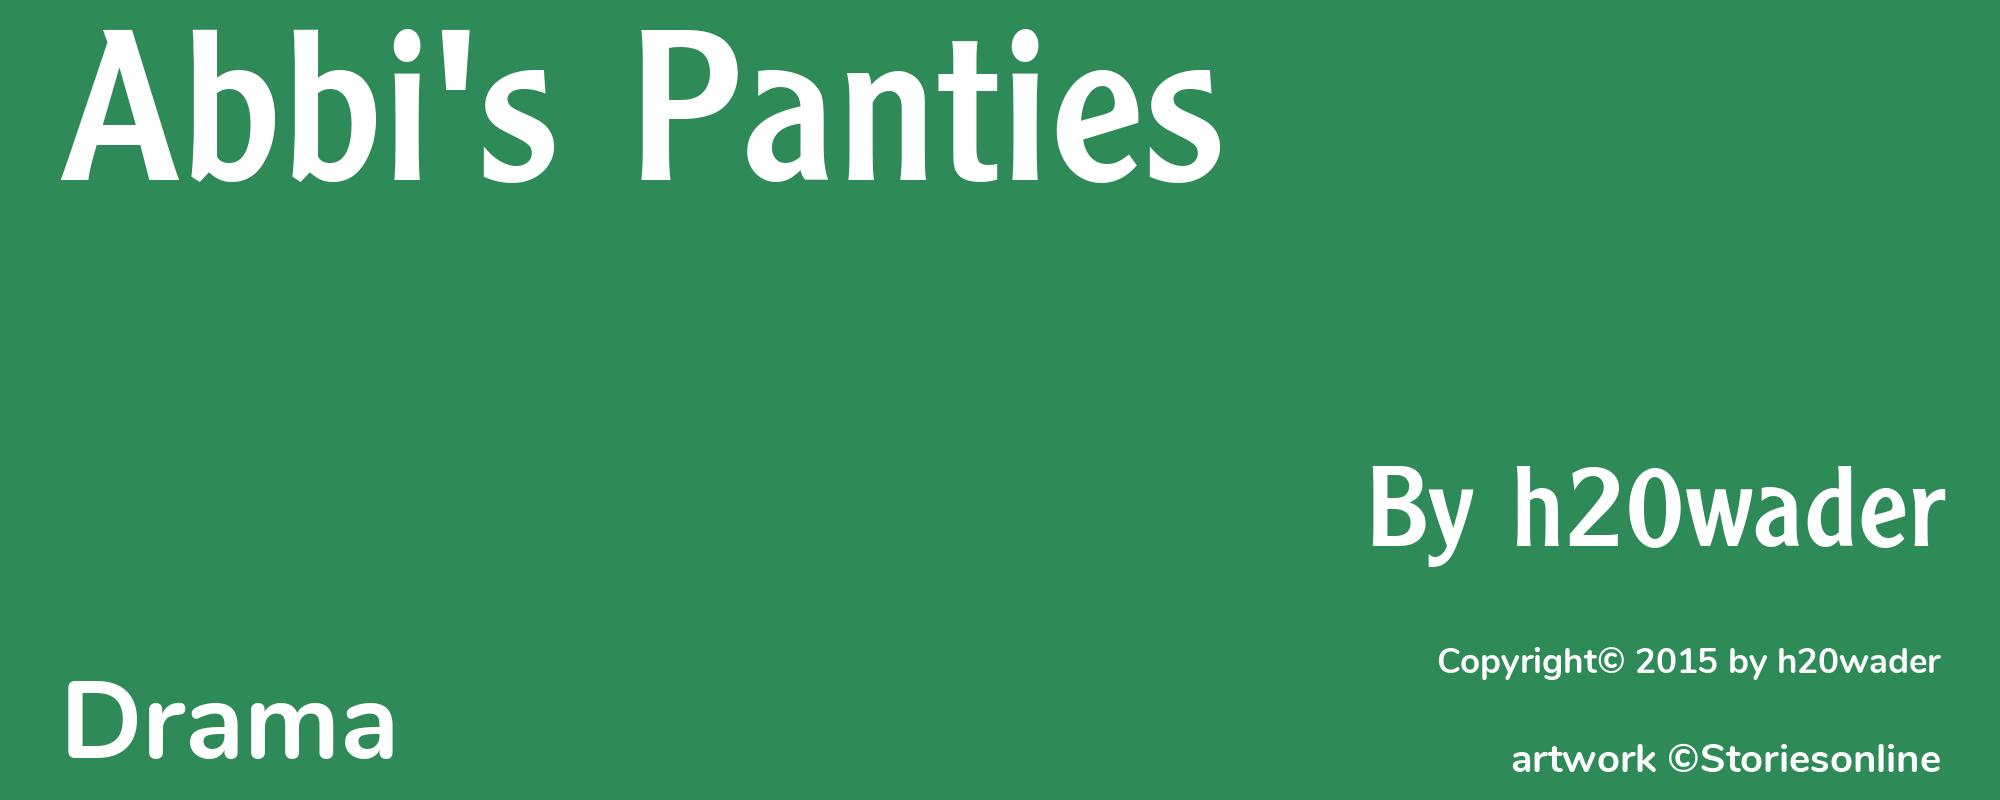 Abbi's Panties - Cover